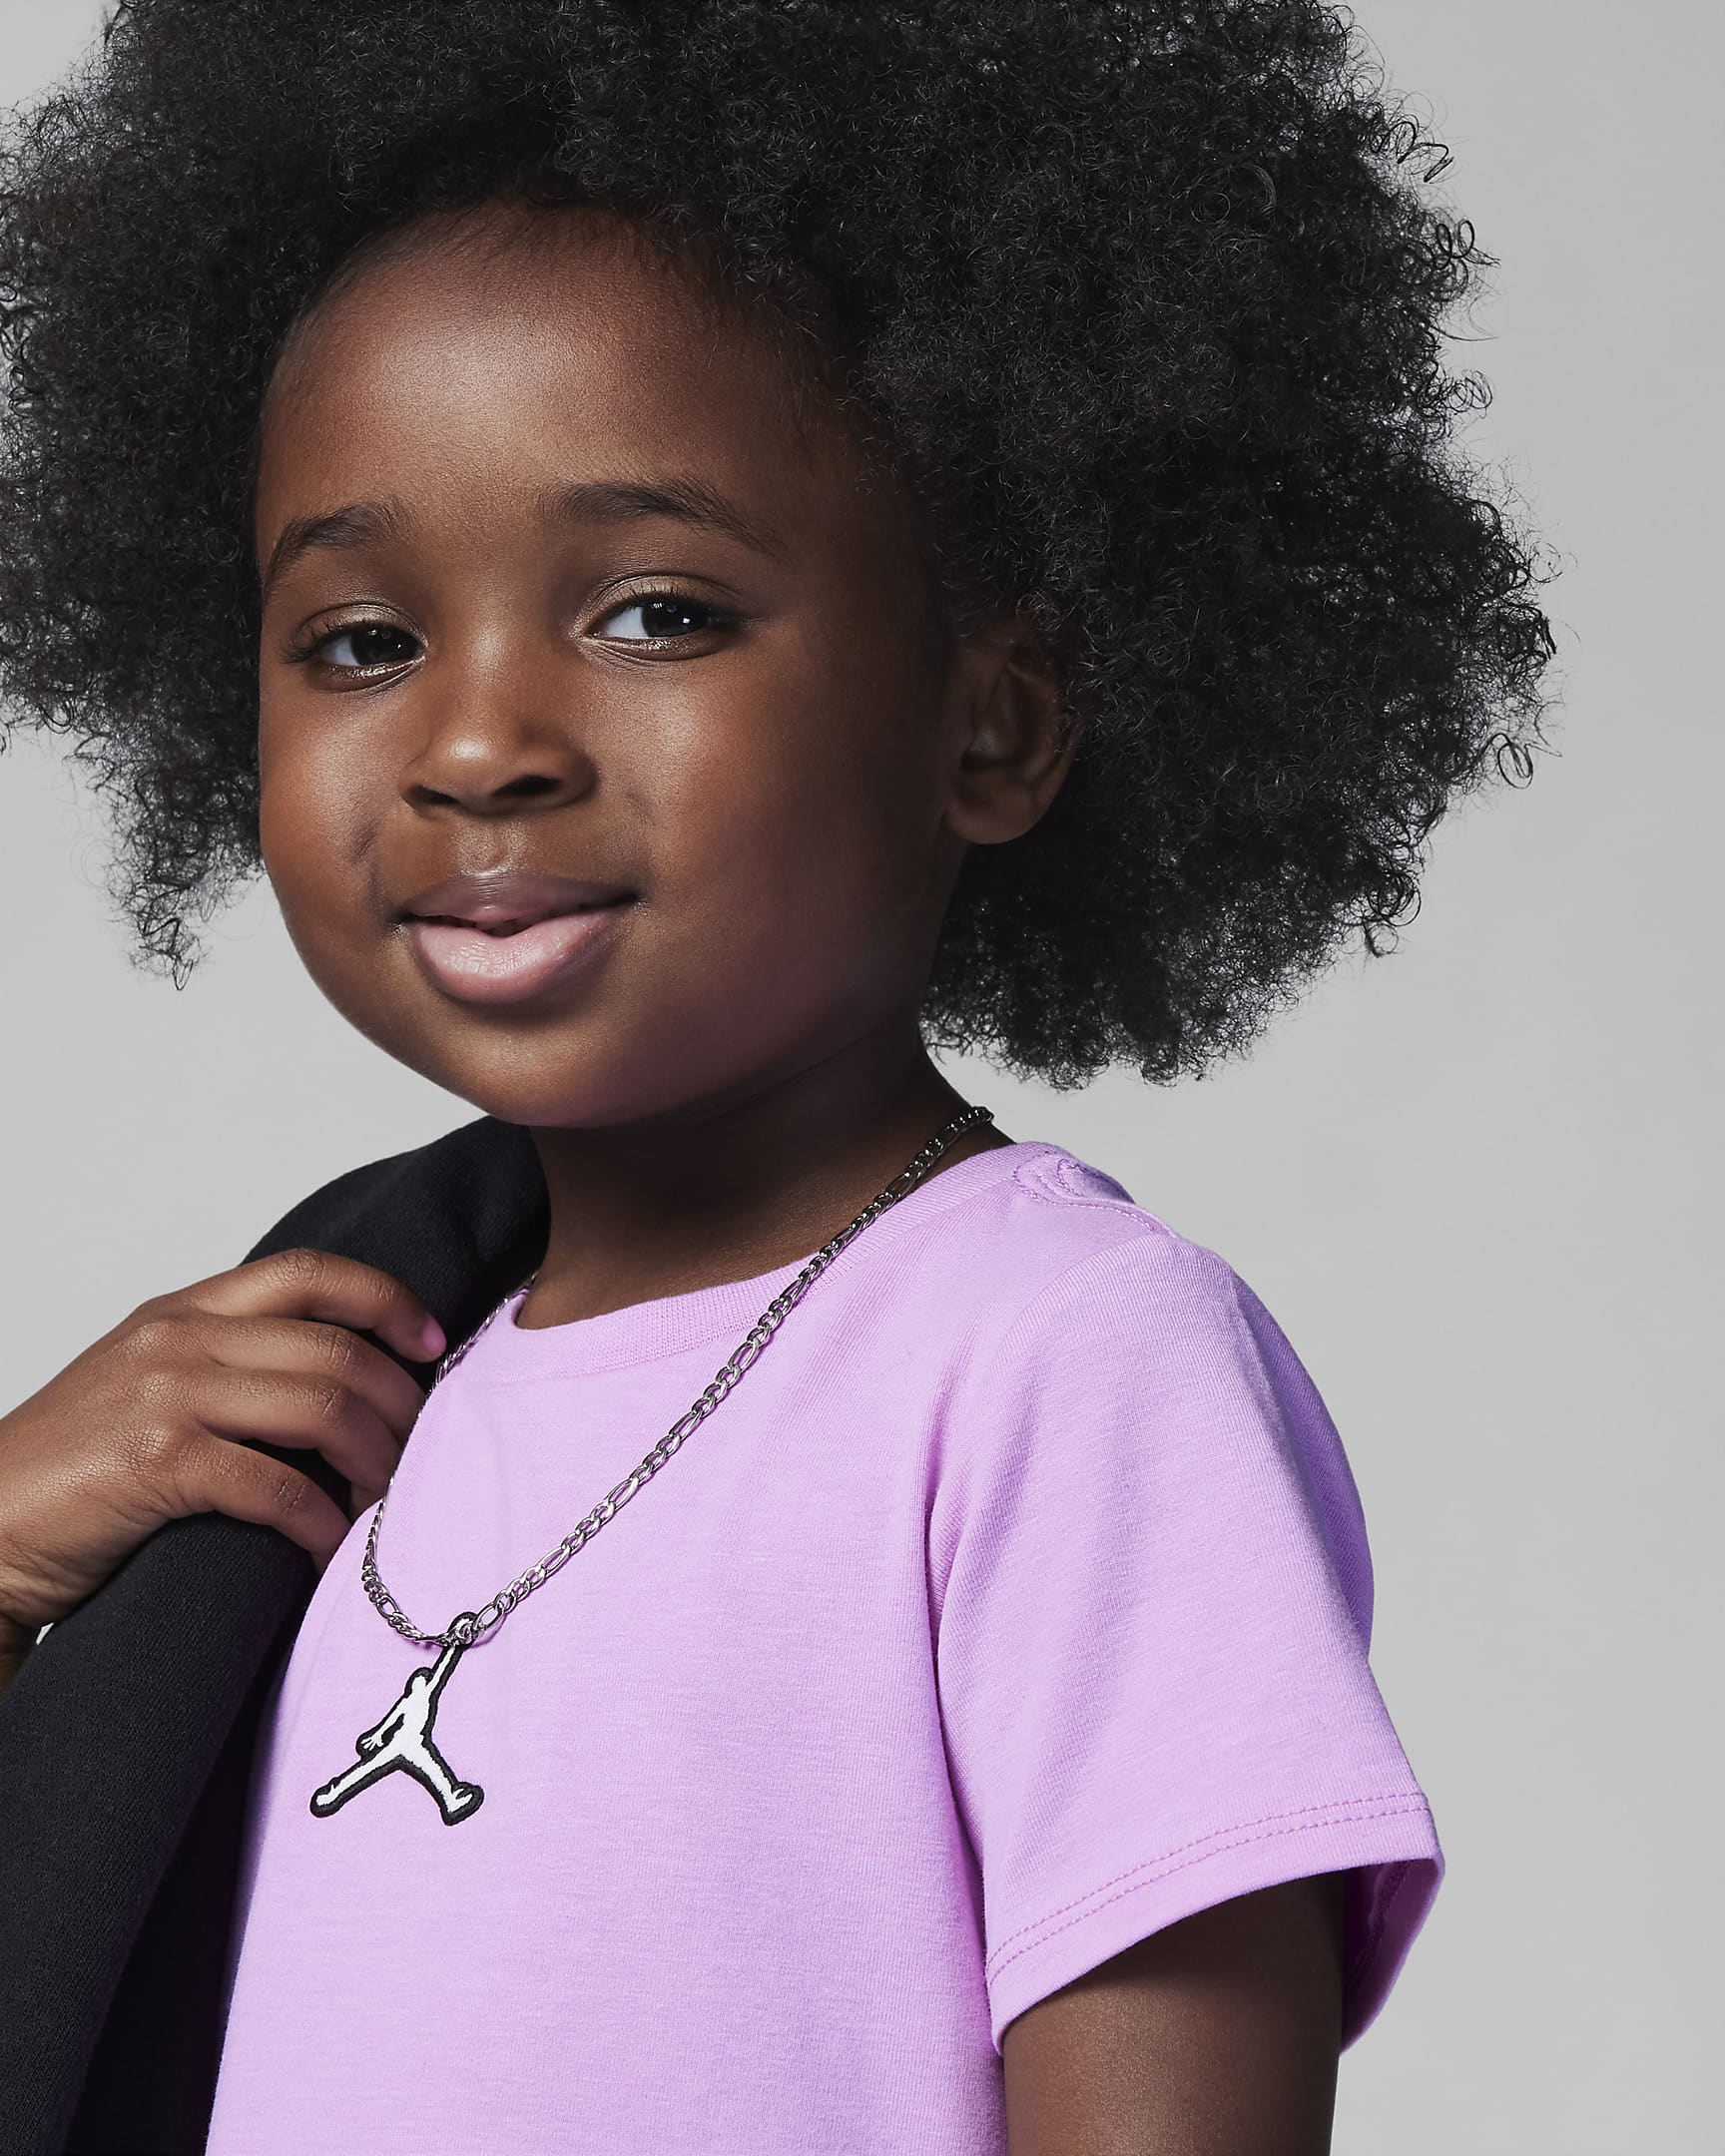 Jordan Toddler Essentials Dress. Nike.com